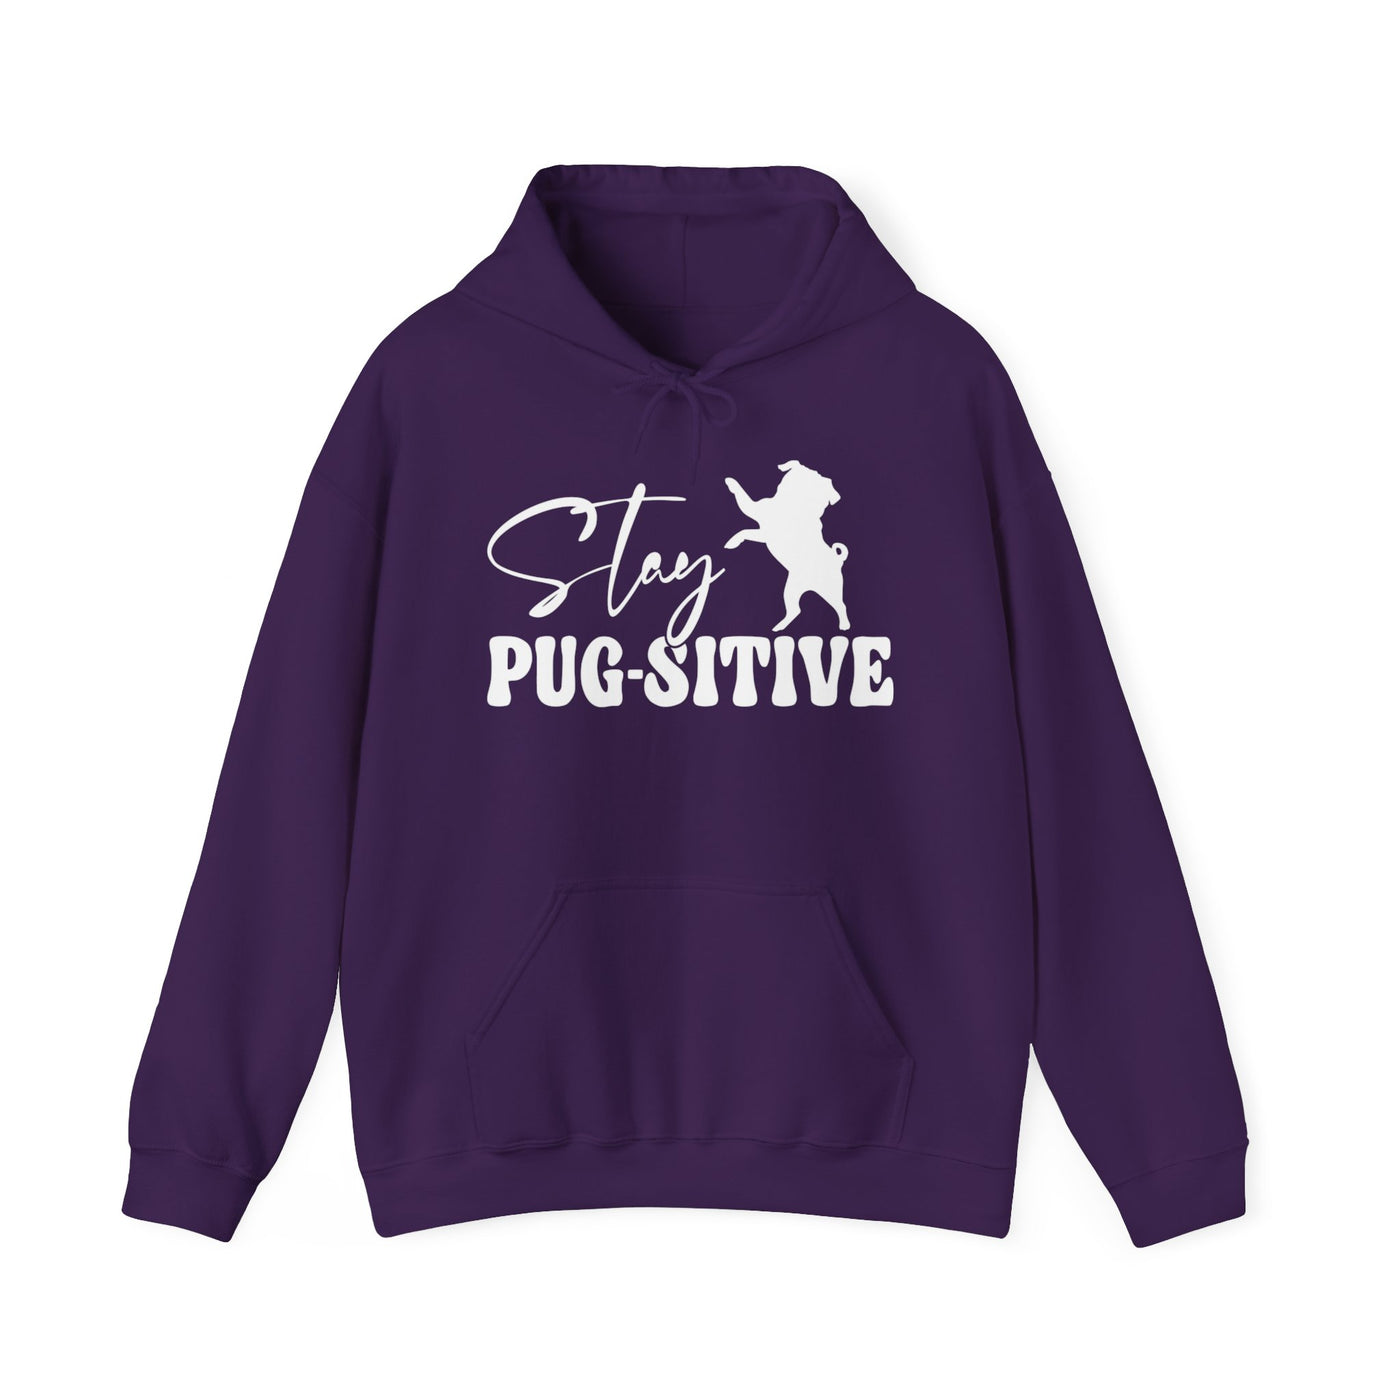 Stay Pugsitive Hoodie